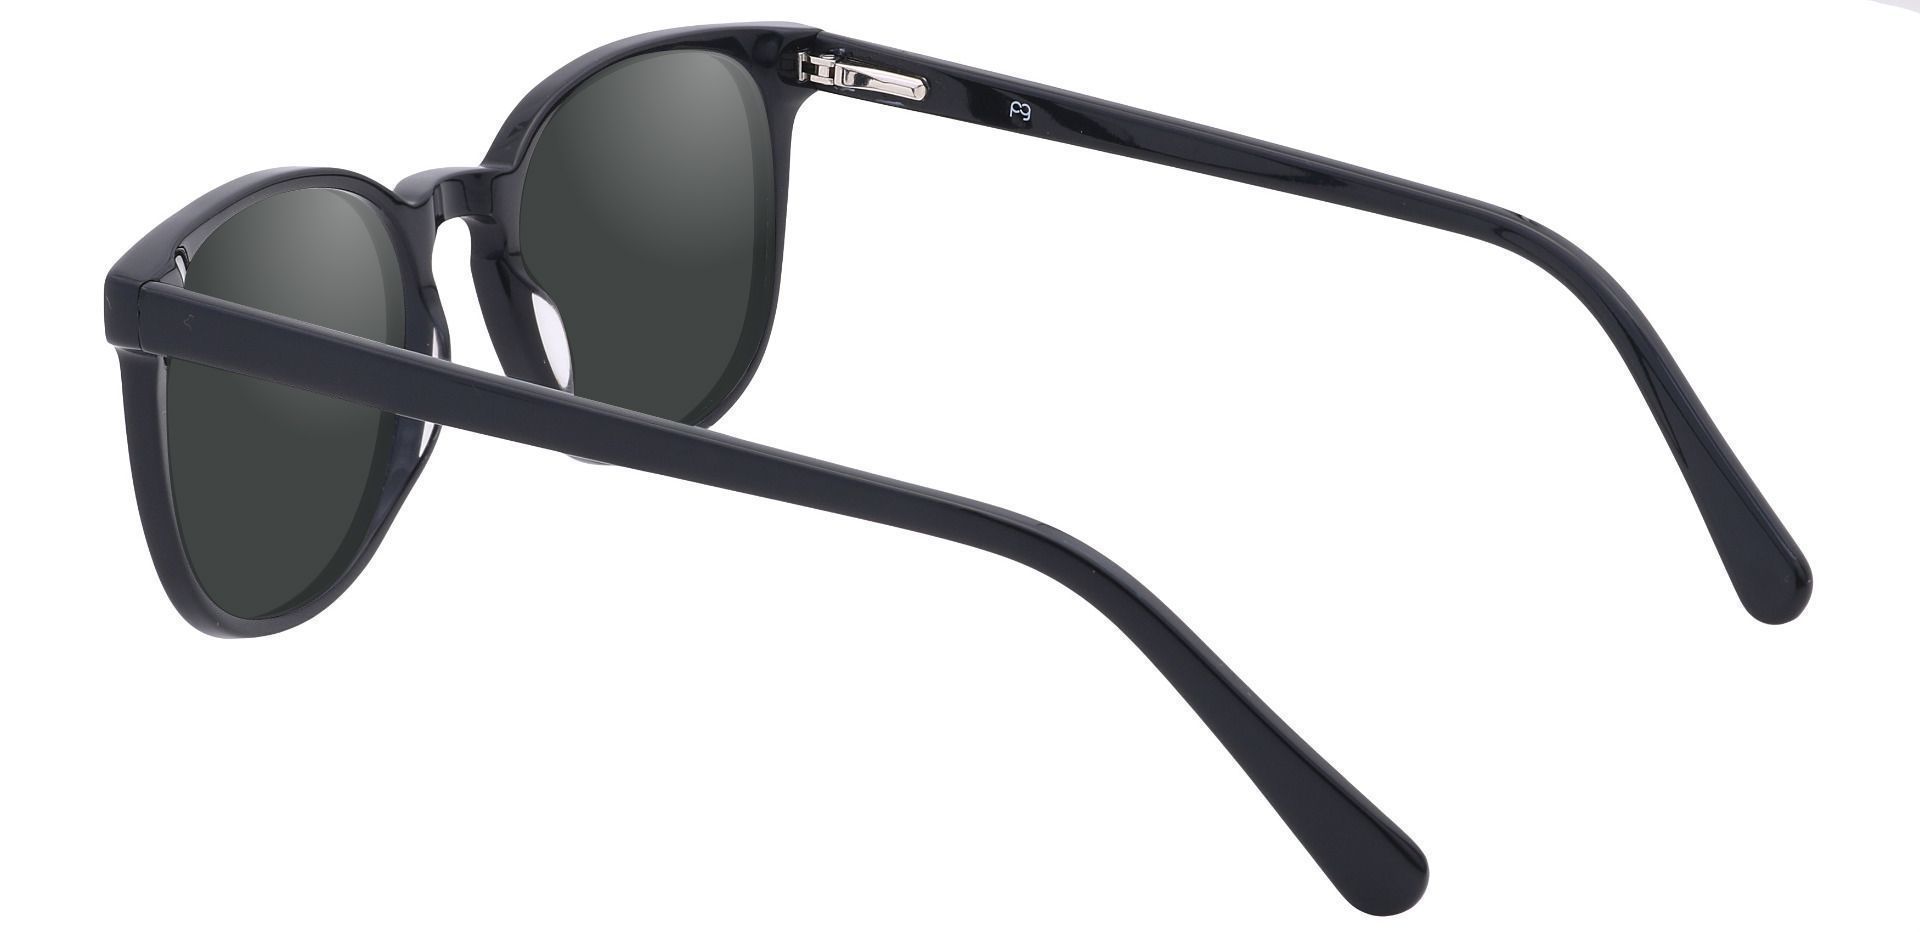 Nebula Round Progressive Sunglasses - Black Frame With Gray Lenses